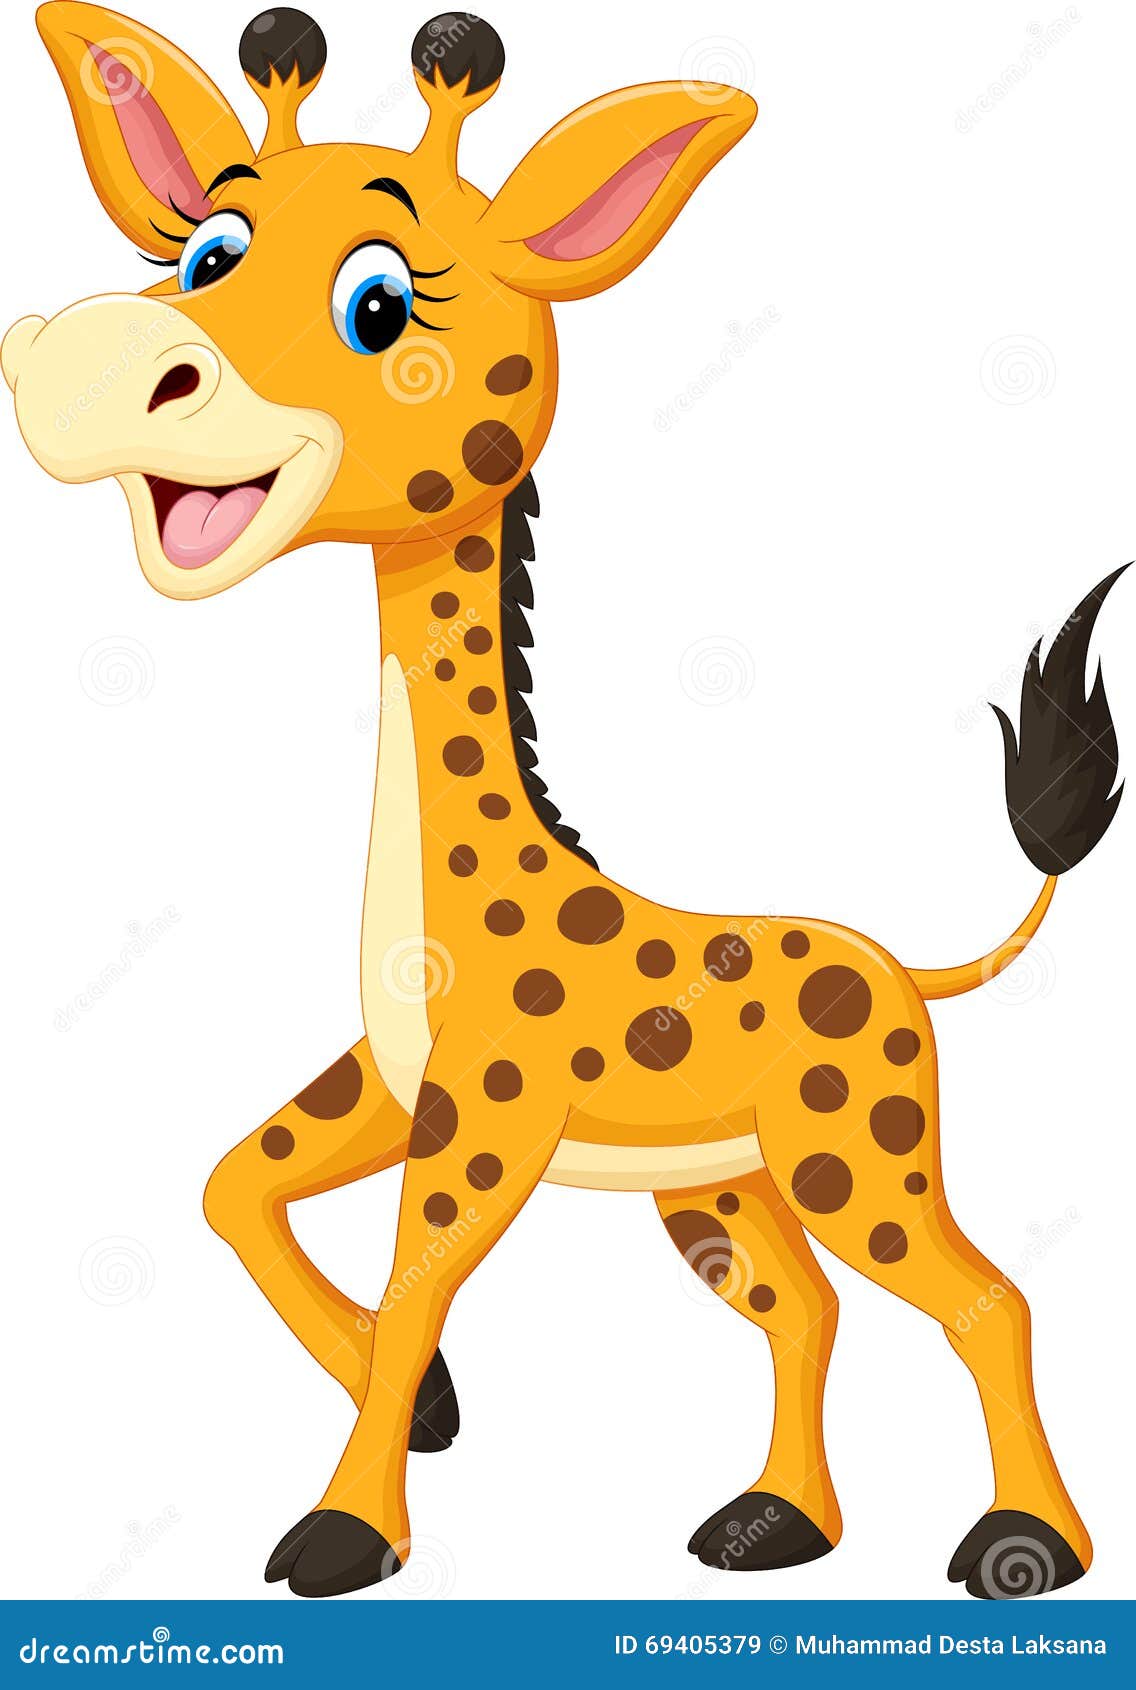 Cute giraffe cartoon stock illustration. Illustration of icon - 69405379